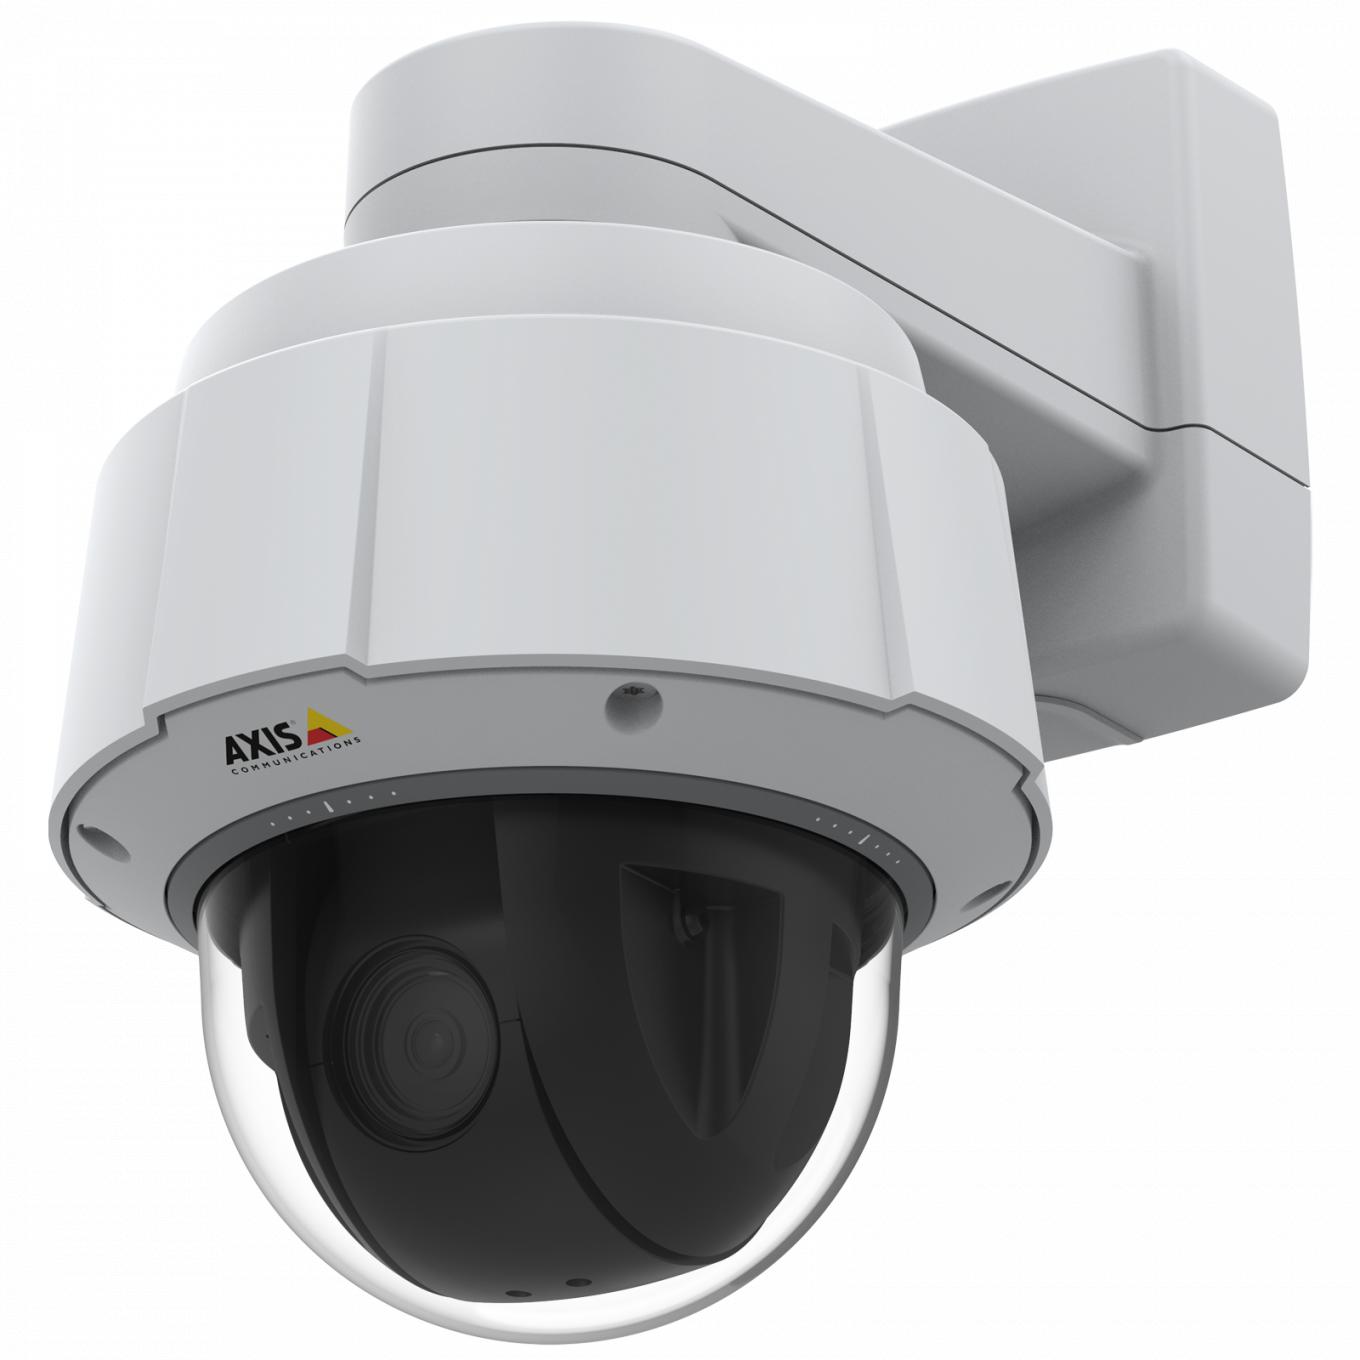 Axis IP Camera Q6075-E tiene TPM con certificado FIPS 140-2 de nivel 2